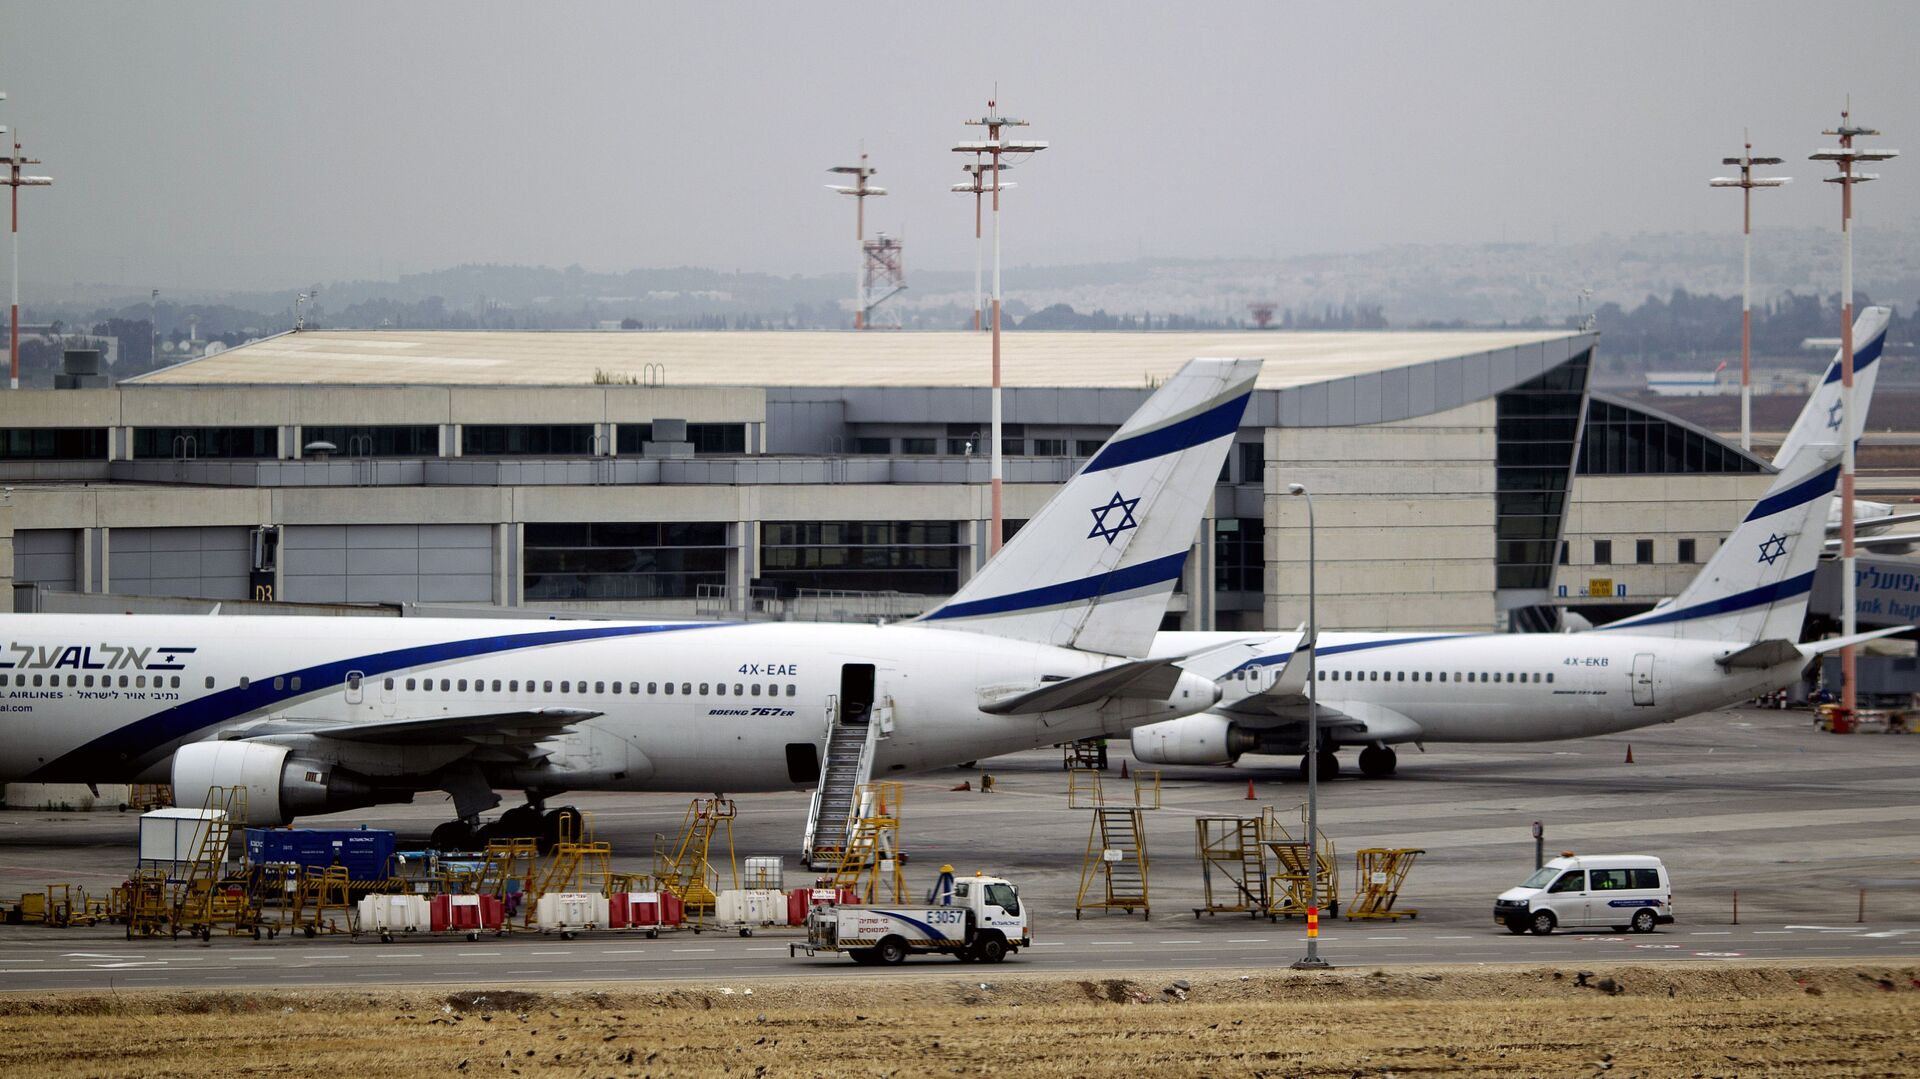 مطار بن غوريون الدولي في تل أبيب، إسرائيل 21 أبريل/ نيسان 2013 - سبوتنيك عربي, 1920, 09.03.2021